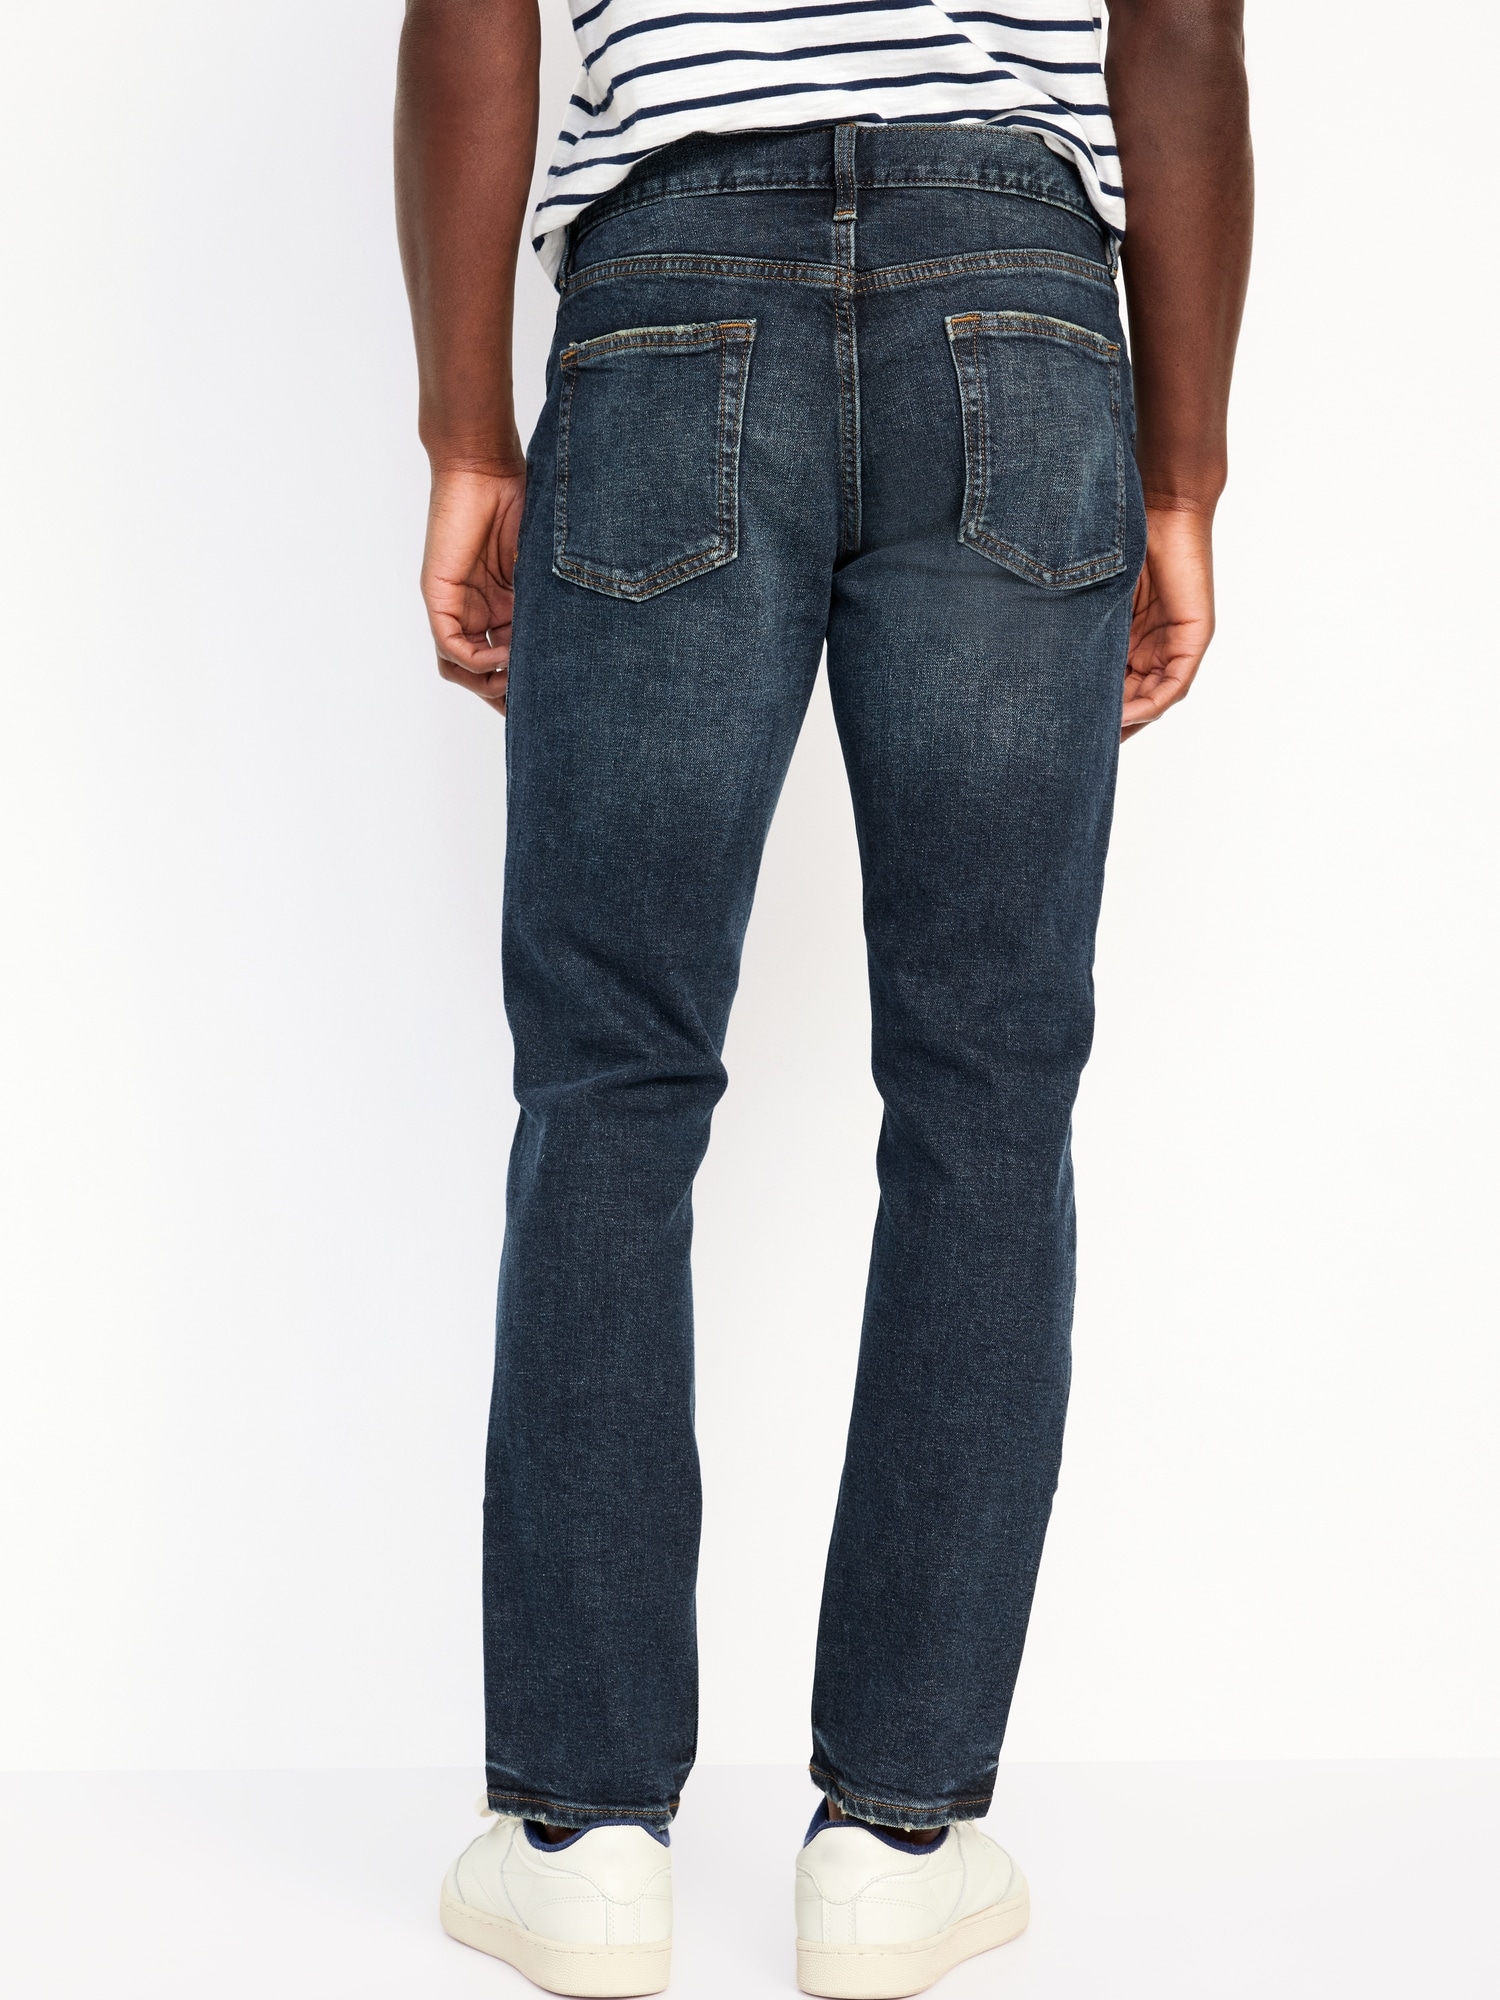 Slim Built-In-Flex Jeans | Old Navy